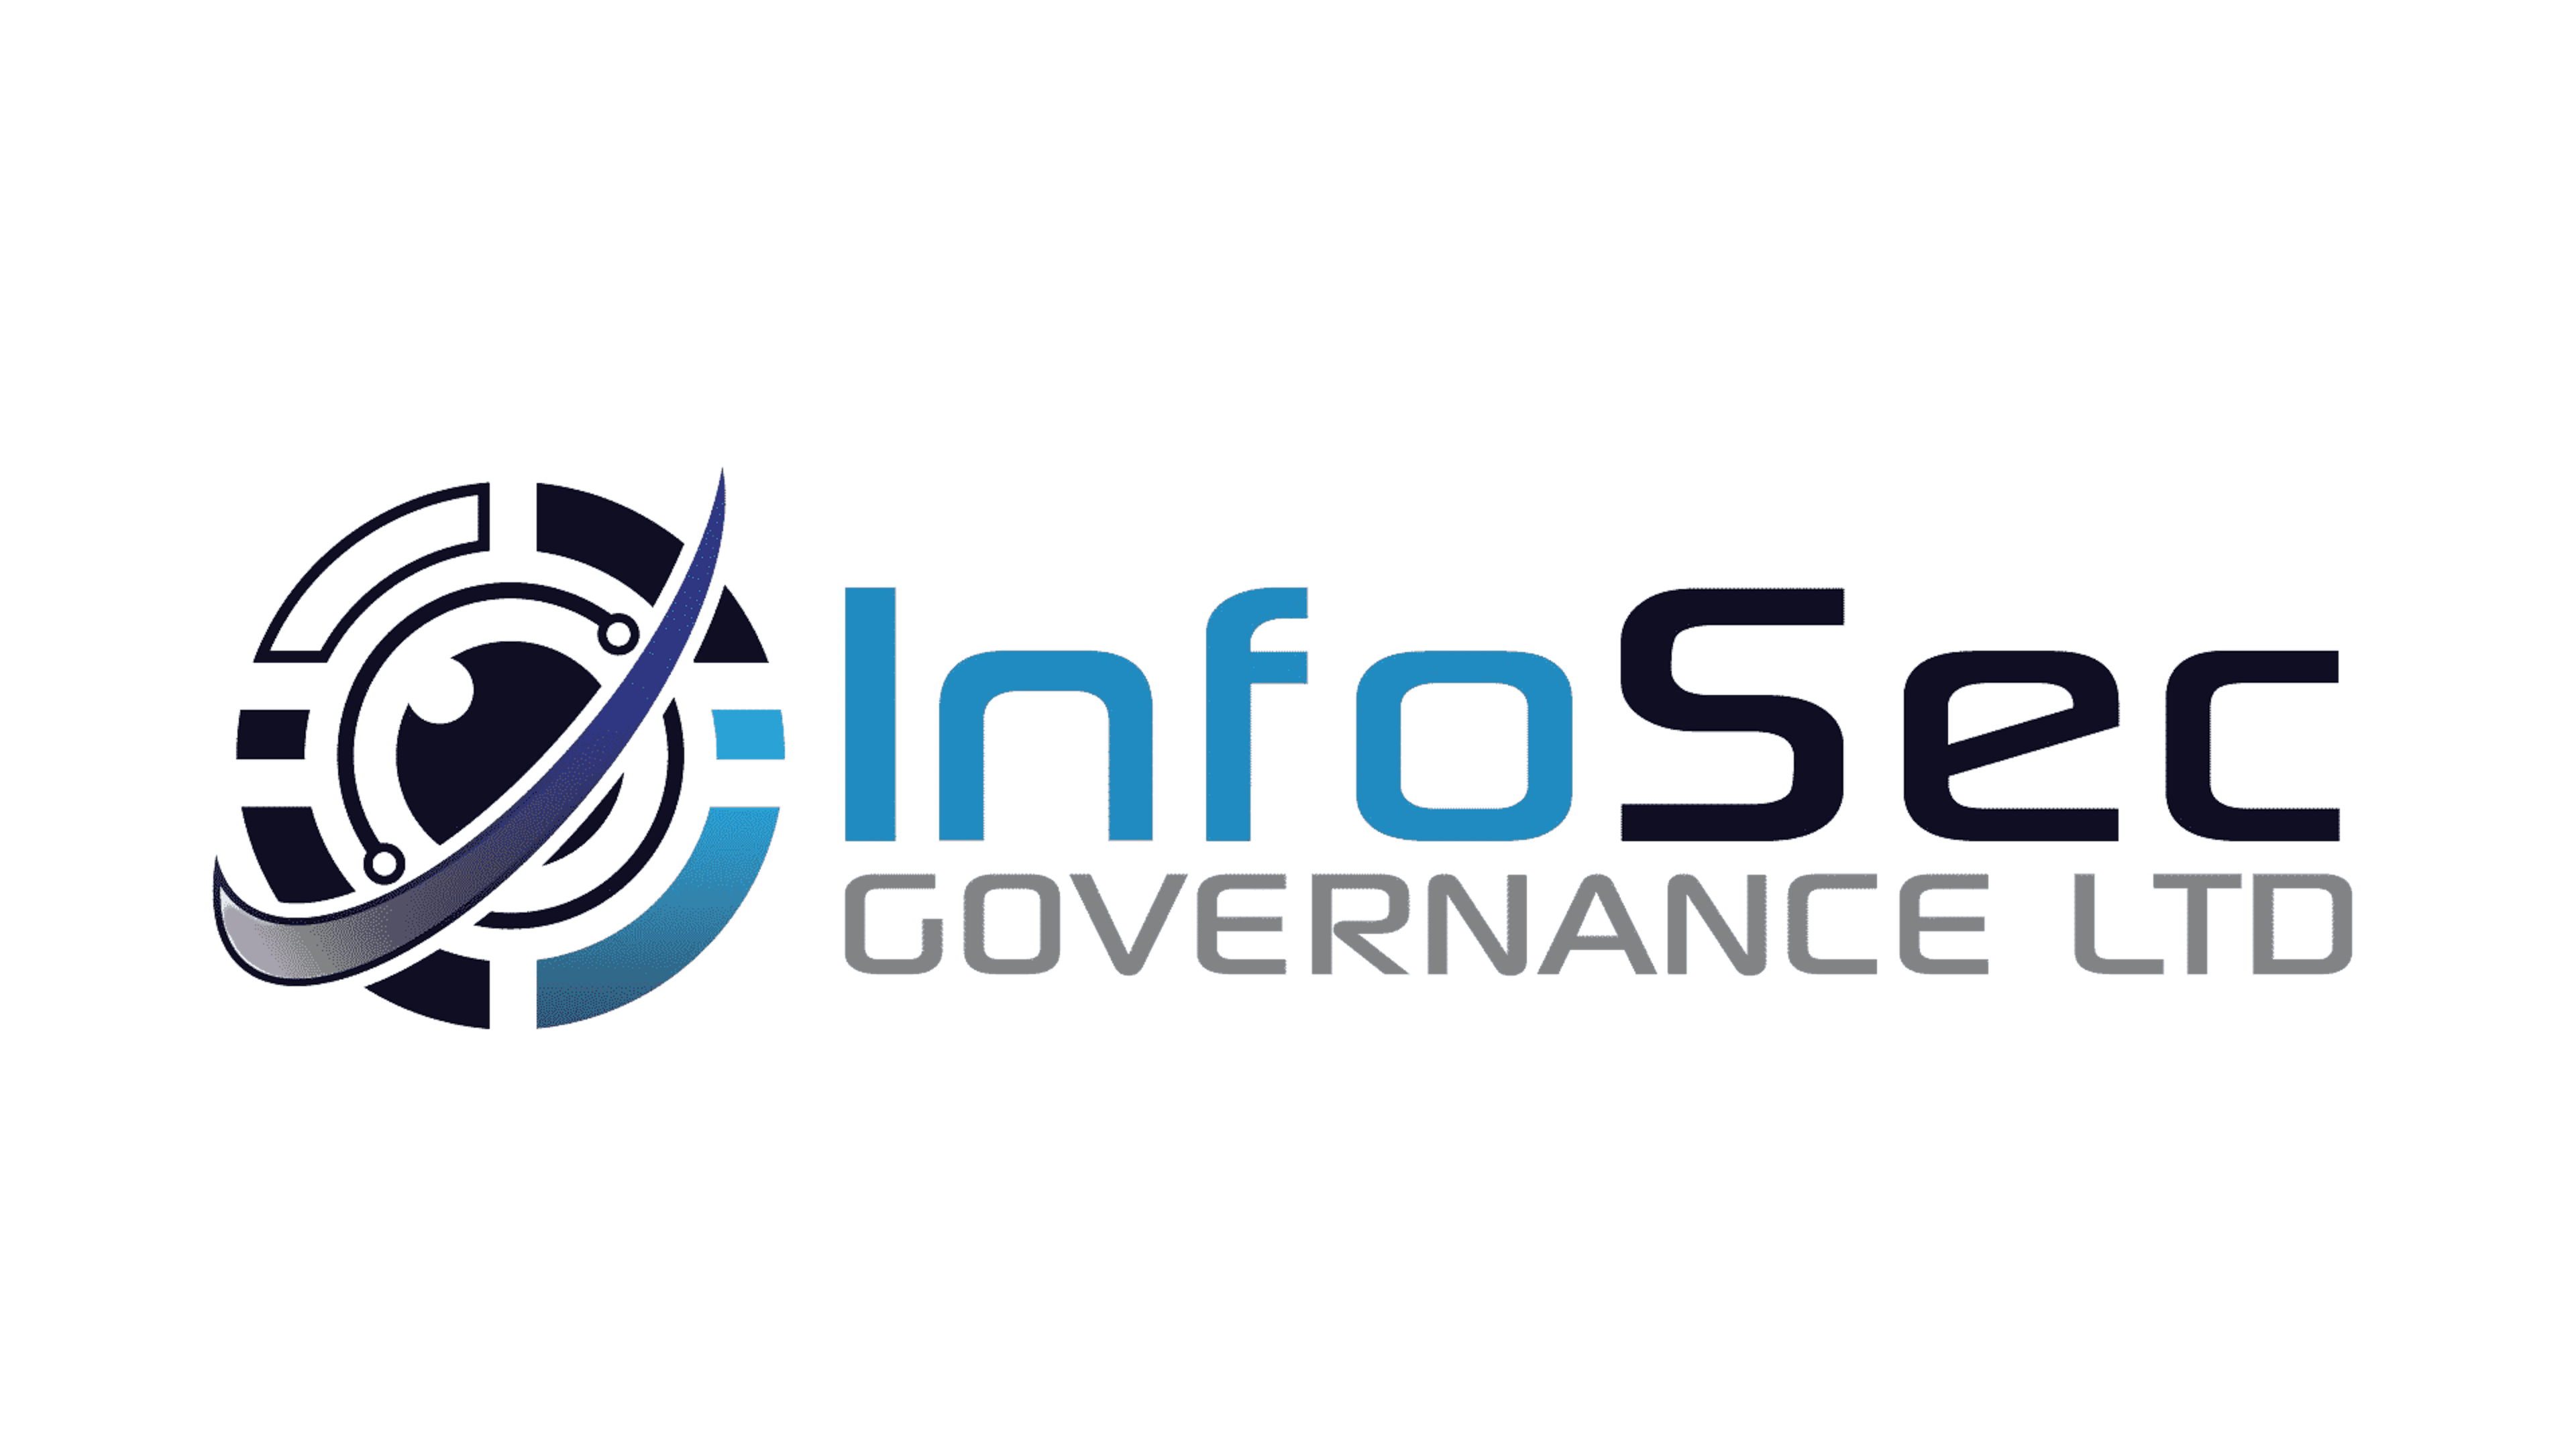 InfoSec Governance